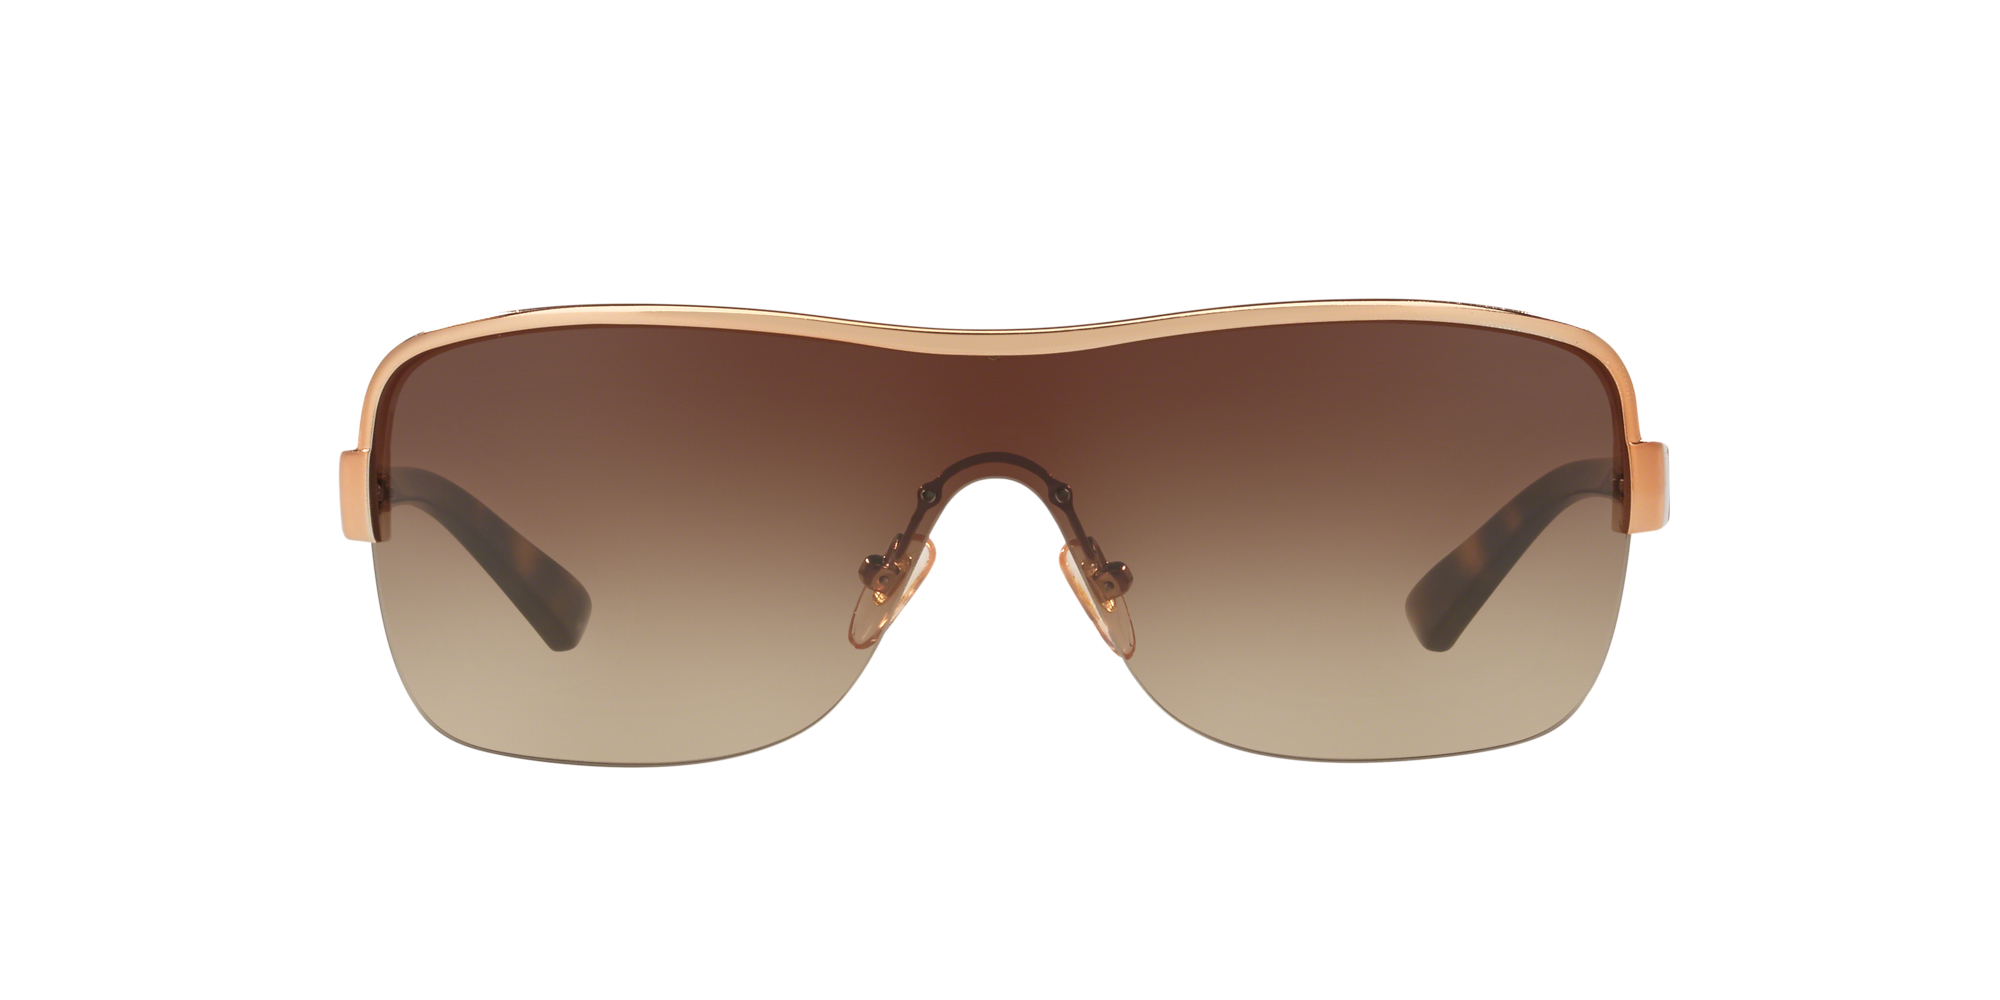 Ray-Ban RB3547N Oval Flat Lenses 51 Green & Gold Sunglasses | Sunglass Hut  USA